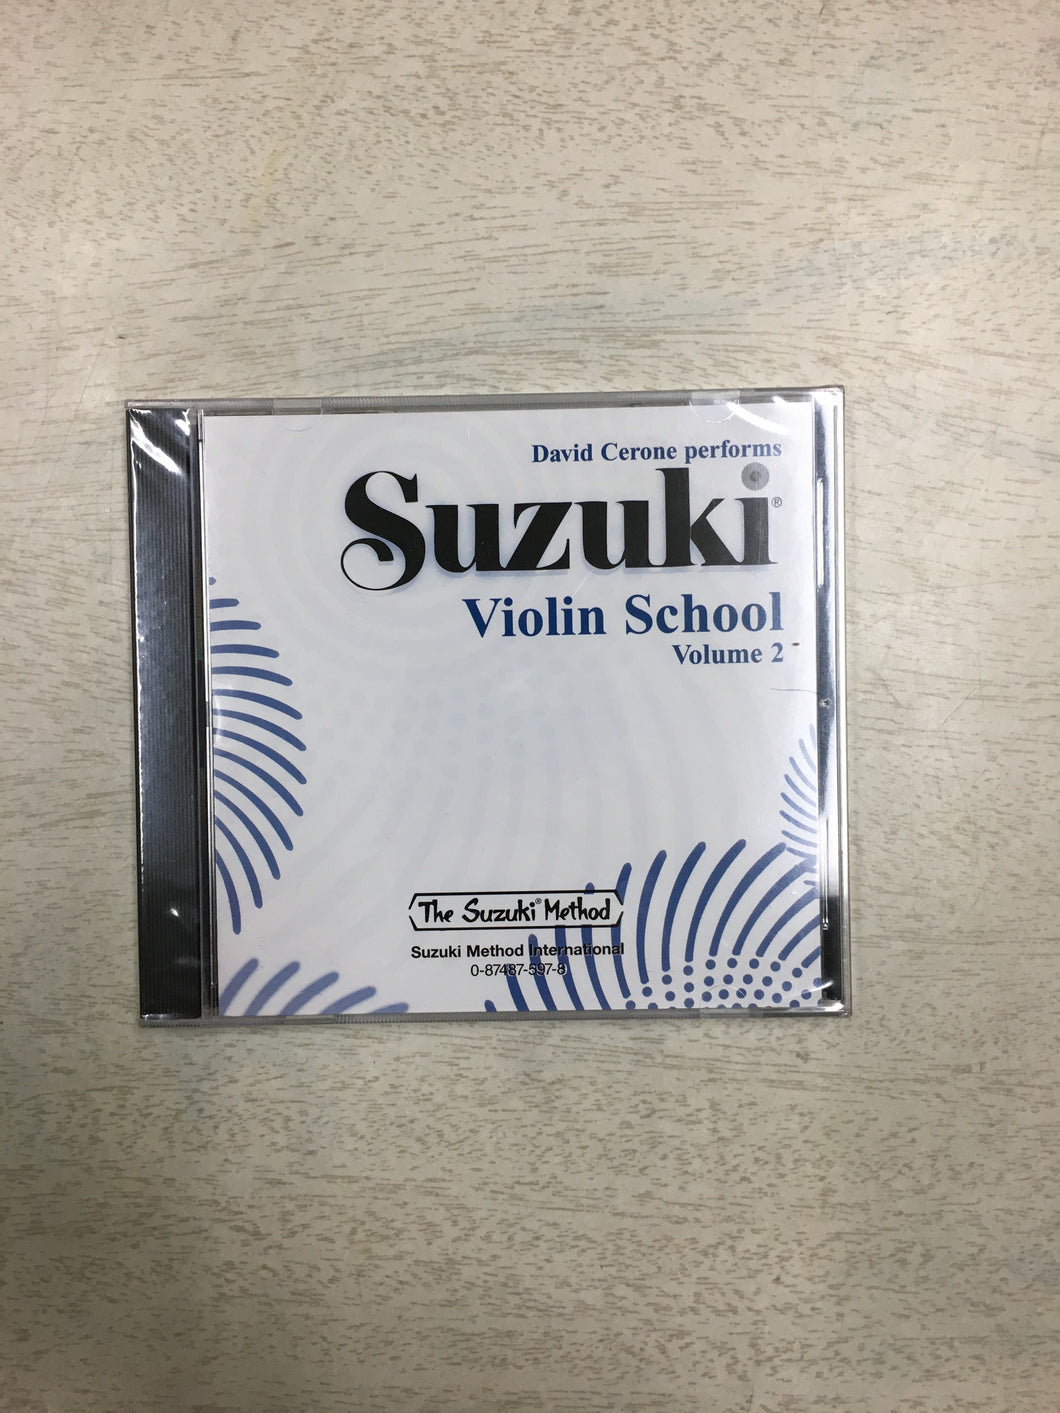 Suzuki Violin School, Volume 2 CD Performed by David Cerone